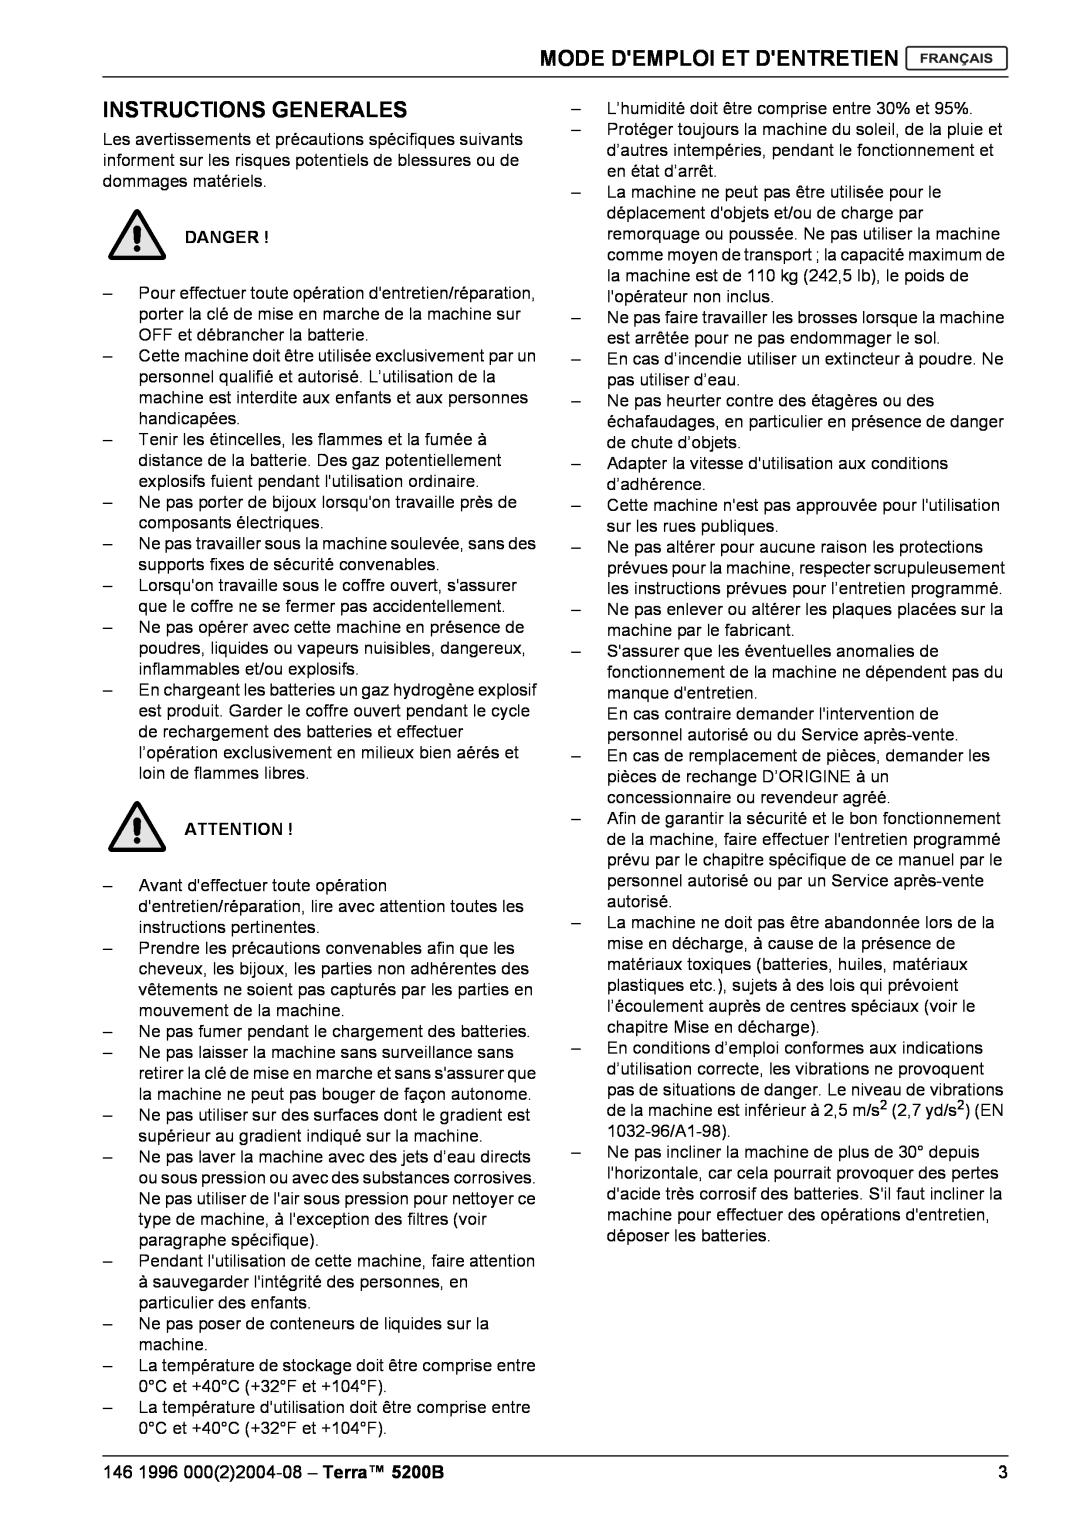 Nilfisk-Advance America 5200B manual Mode Demploi Et Dentretien, Instructions Generales, Danger 